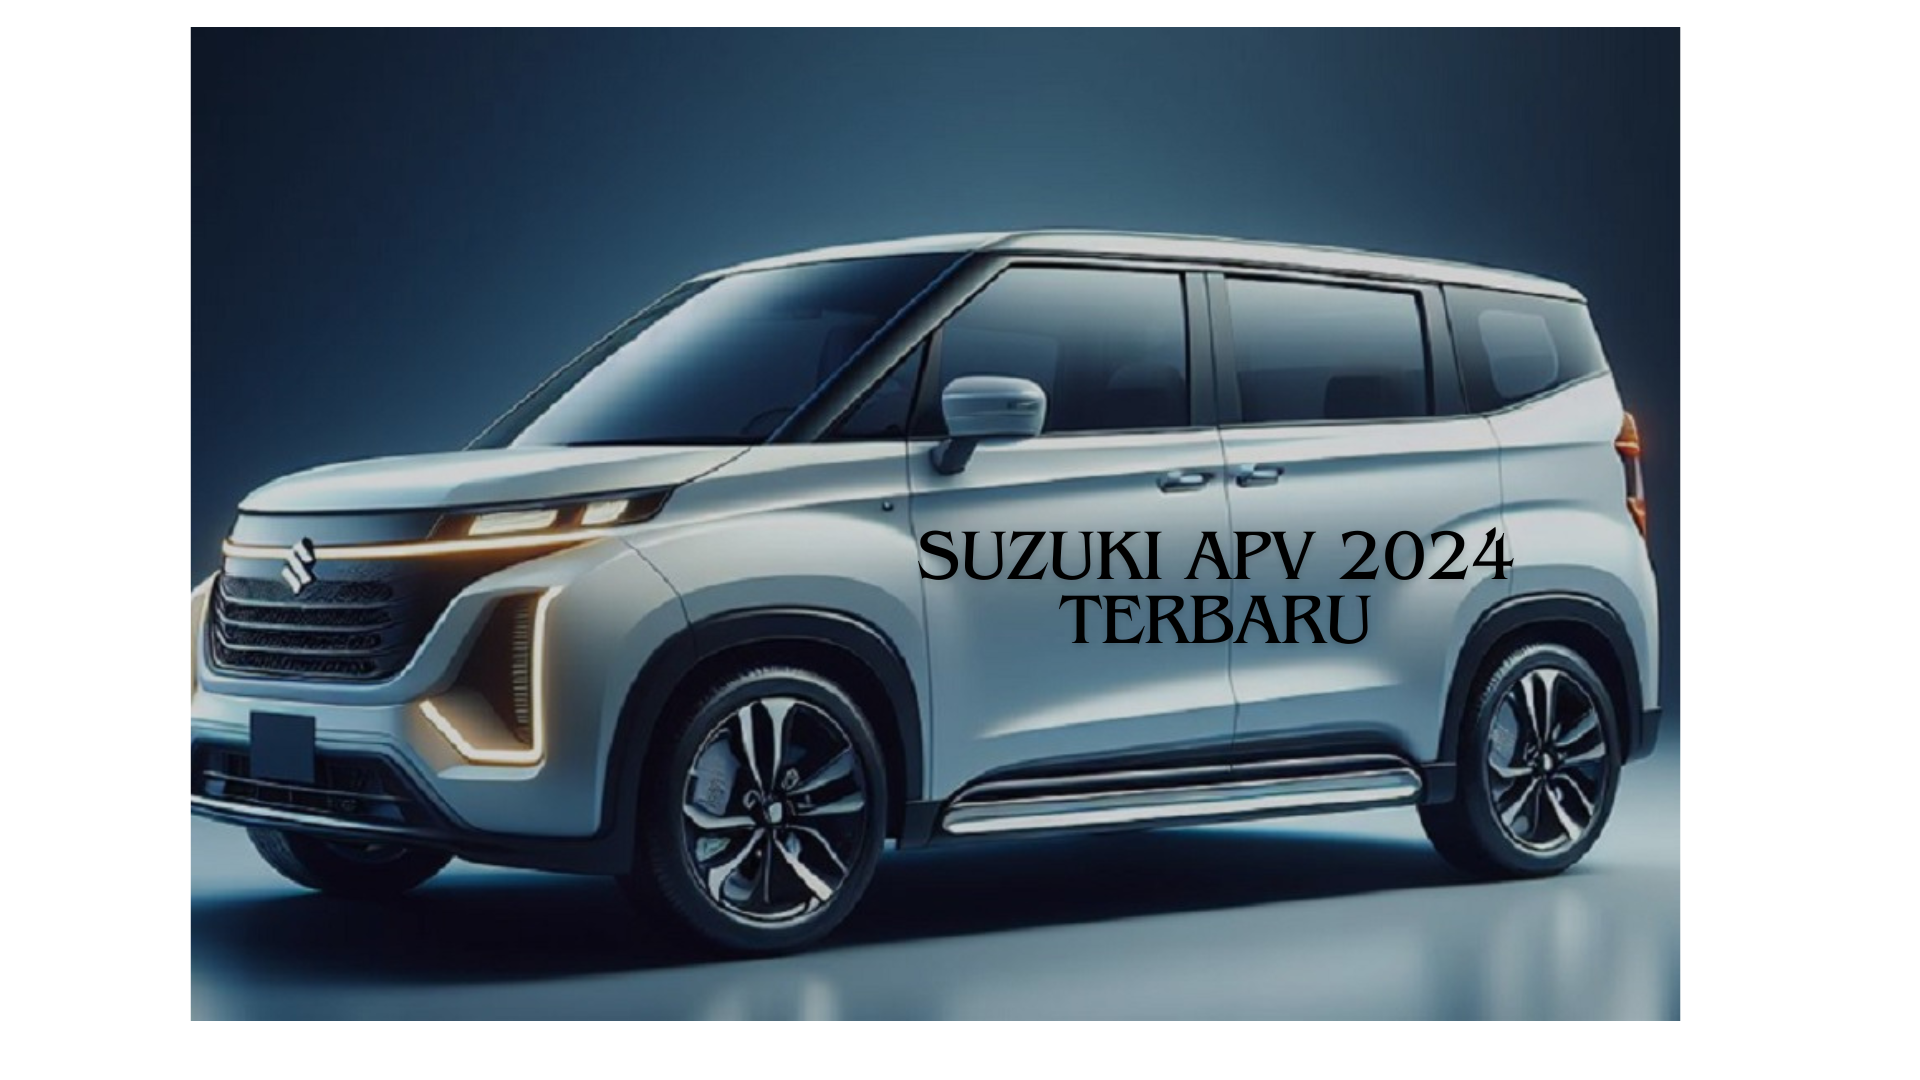 Suzuki APV 2024 Terbaru, Tranformasi Hebat Penampilan dan Mesin Terbaru Bikin Melongo